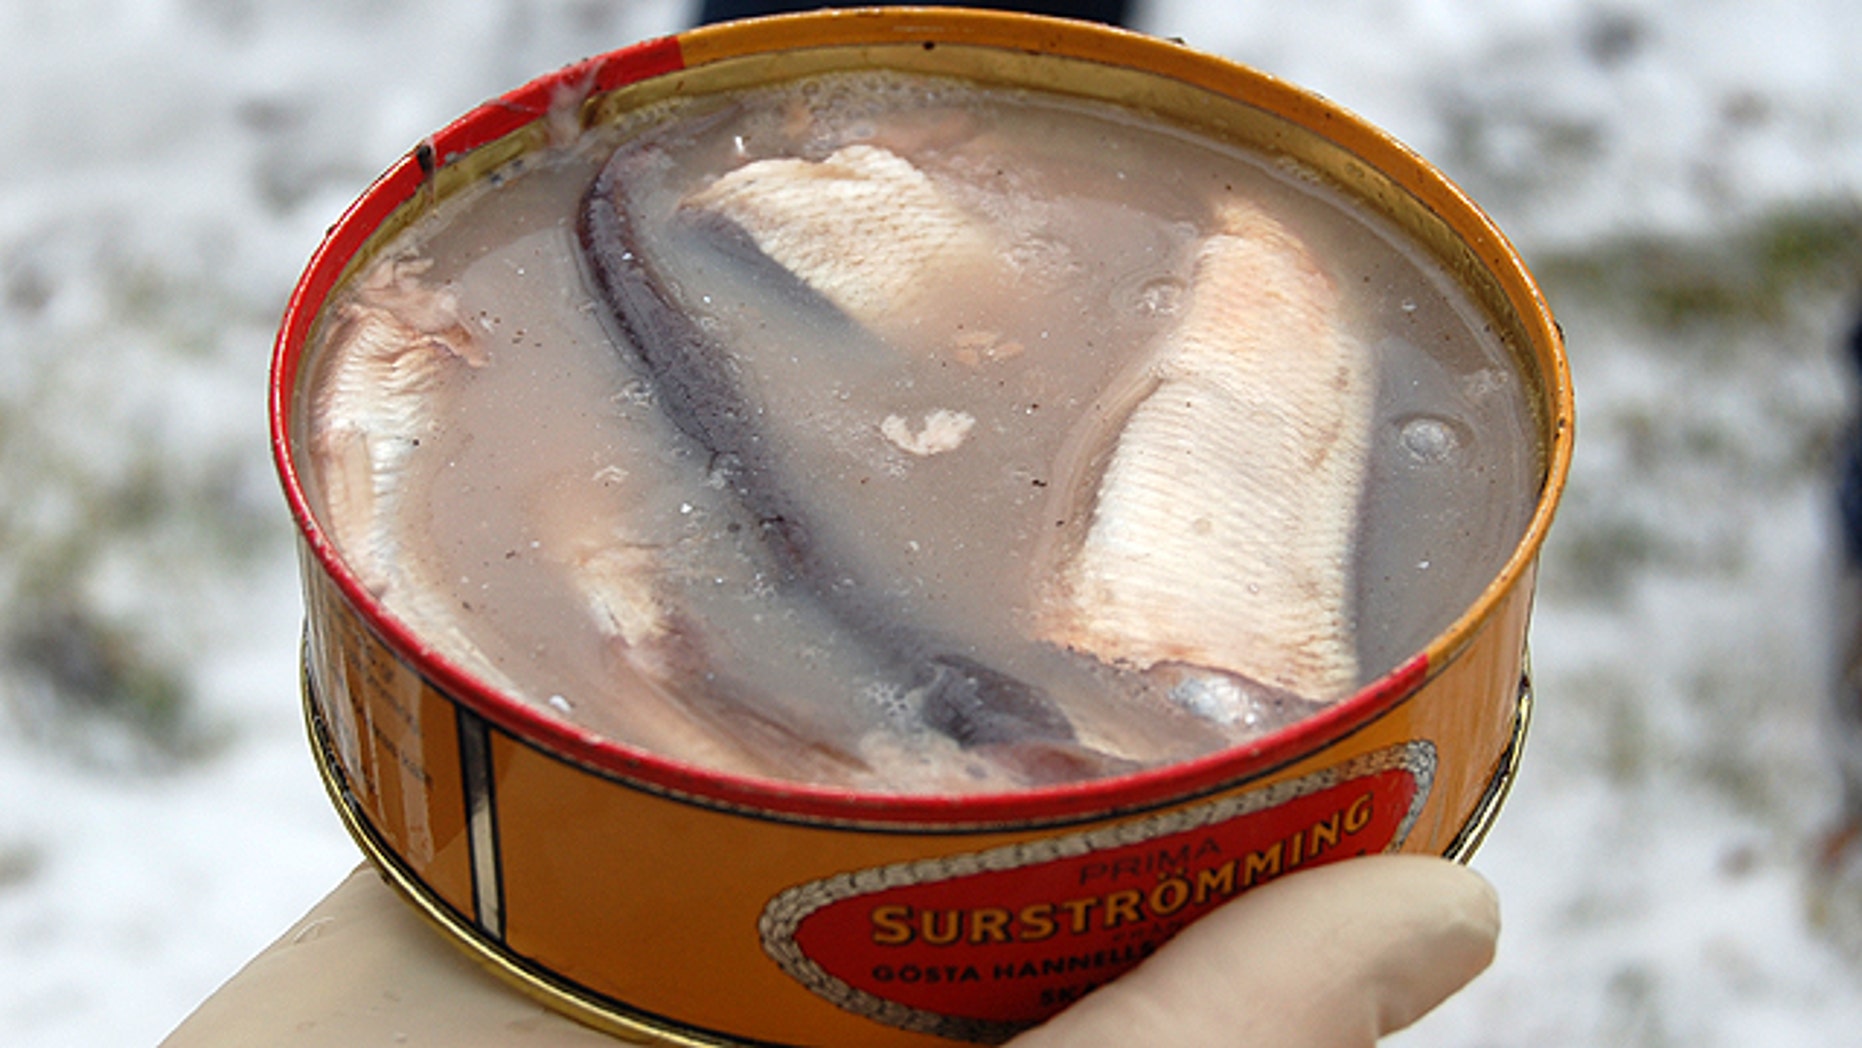 Ikan Surströmming